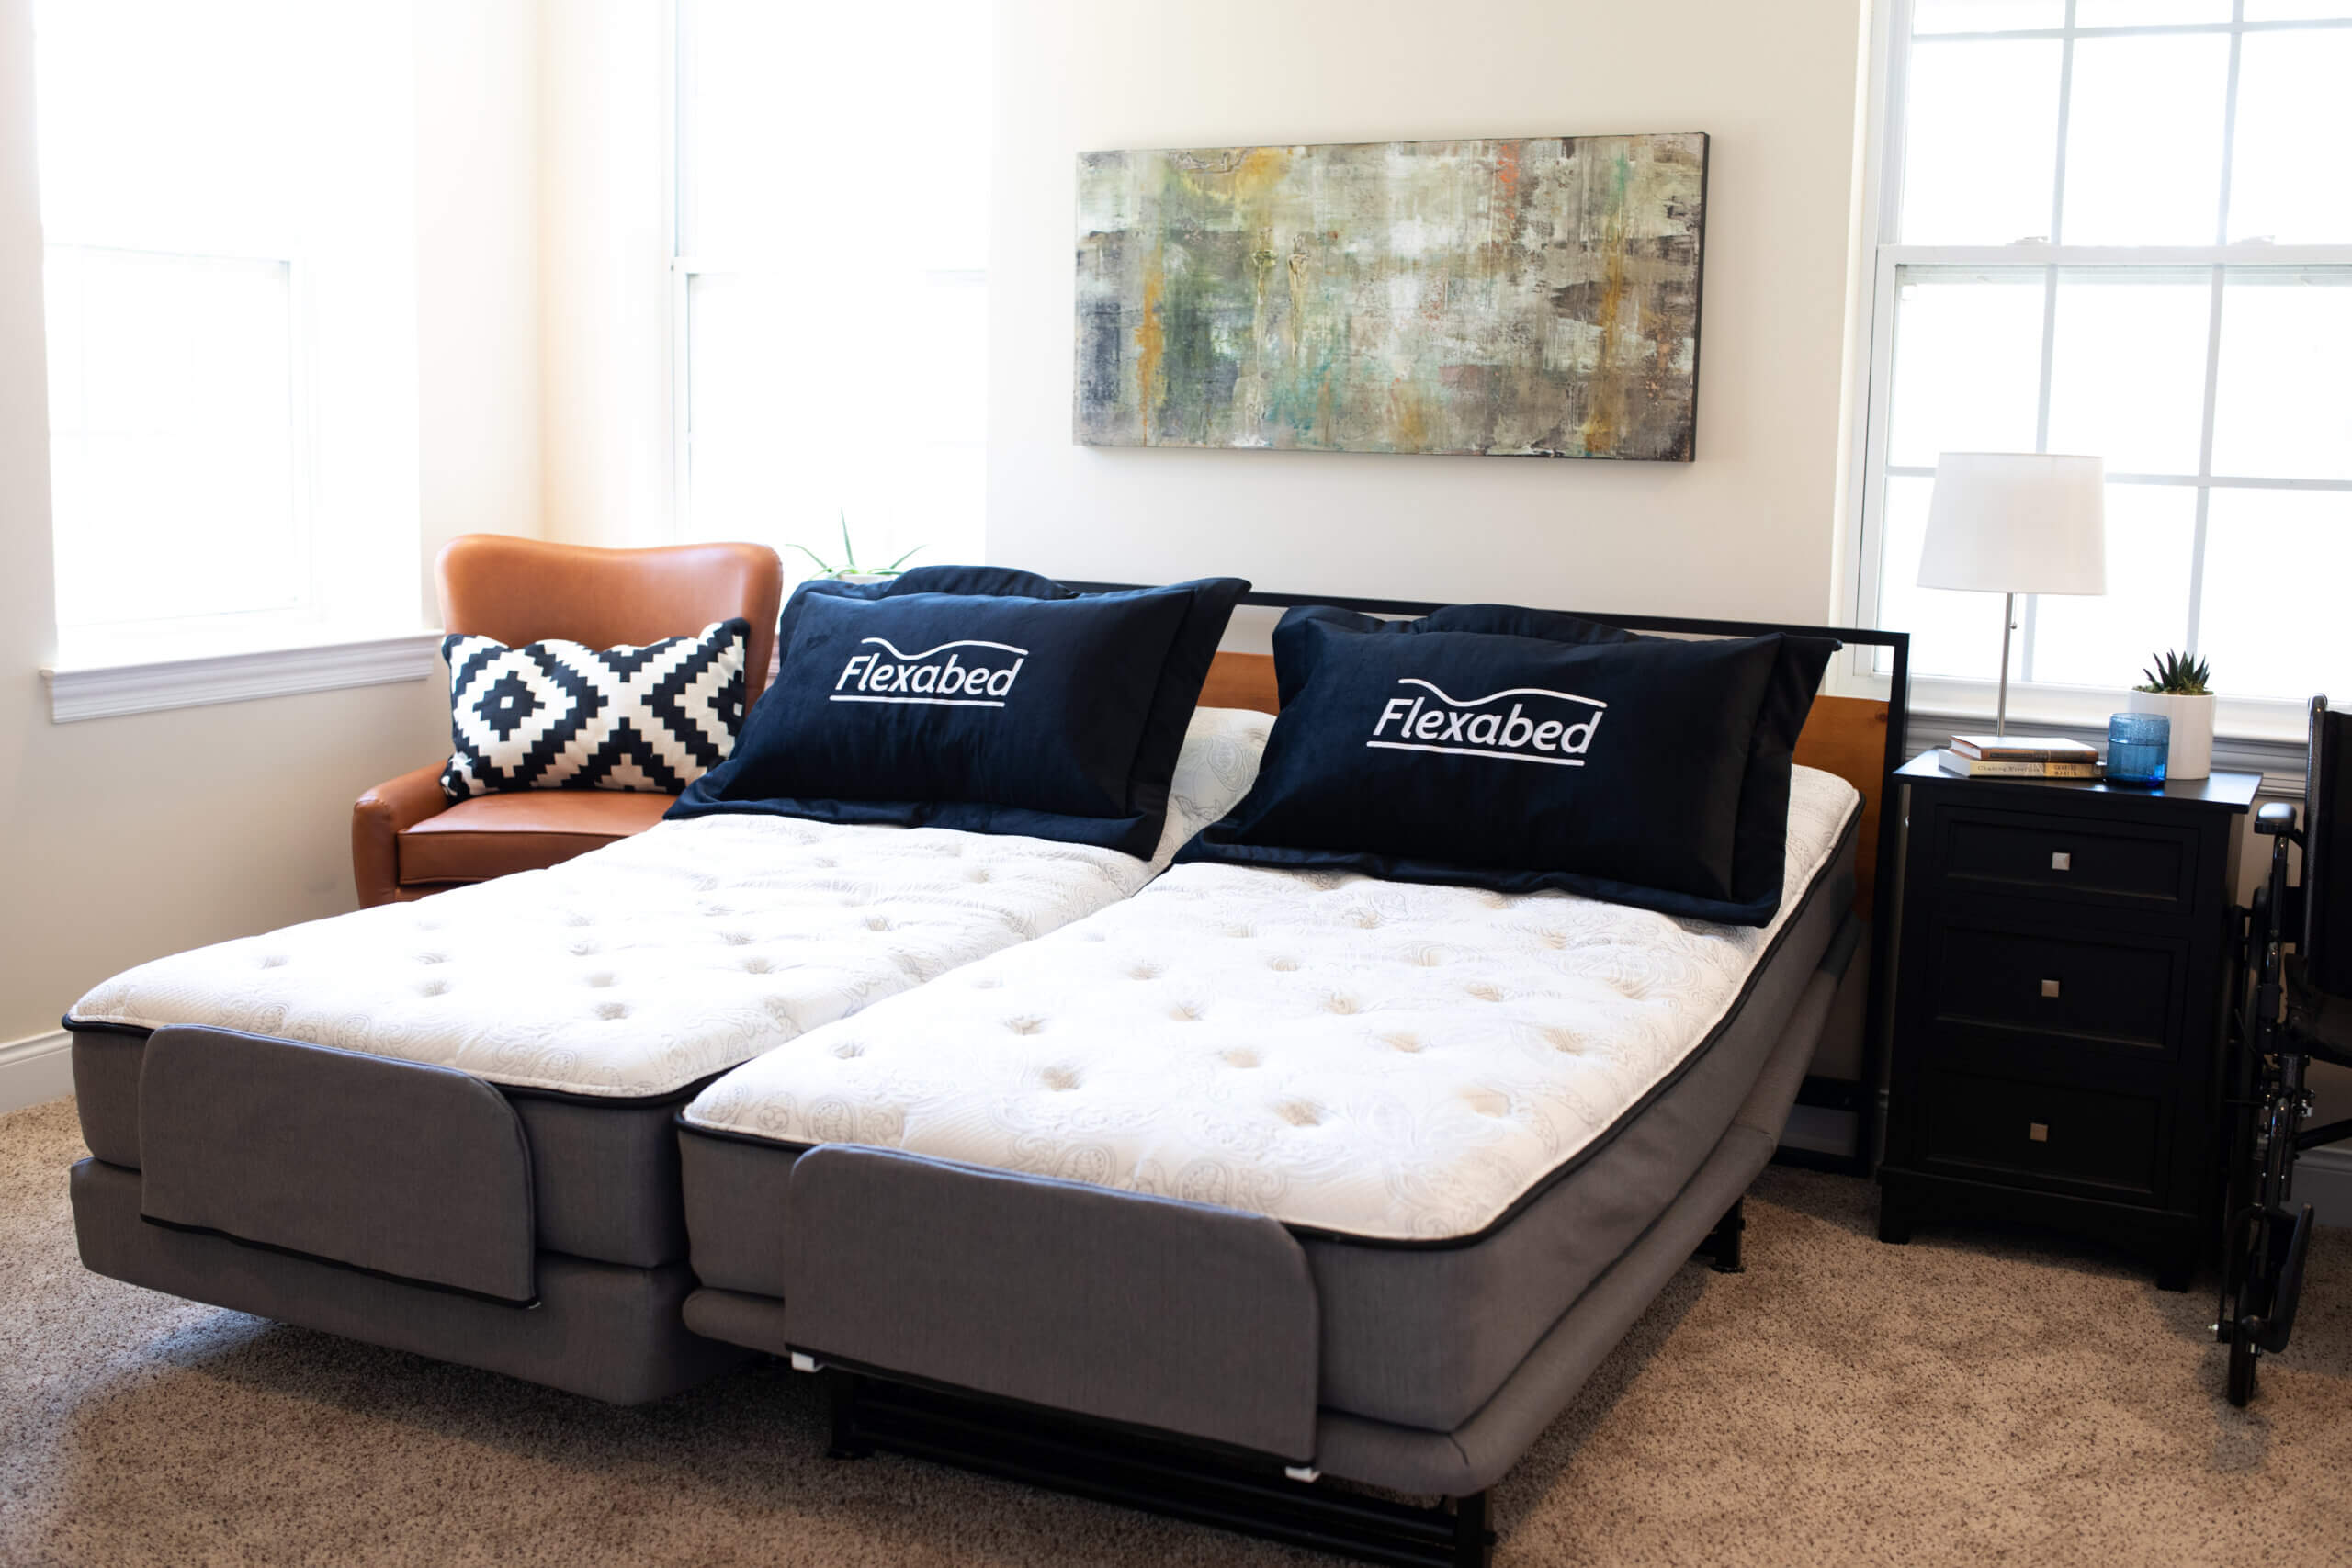 flex a bed low profile mattress